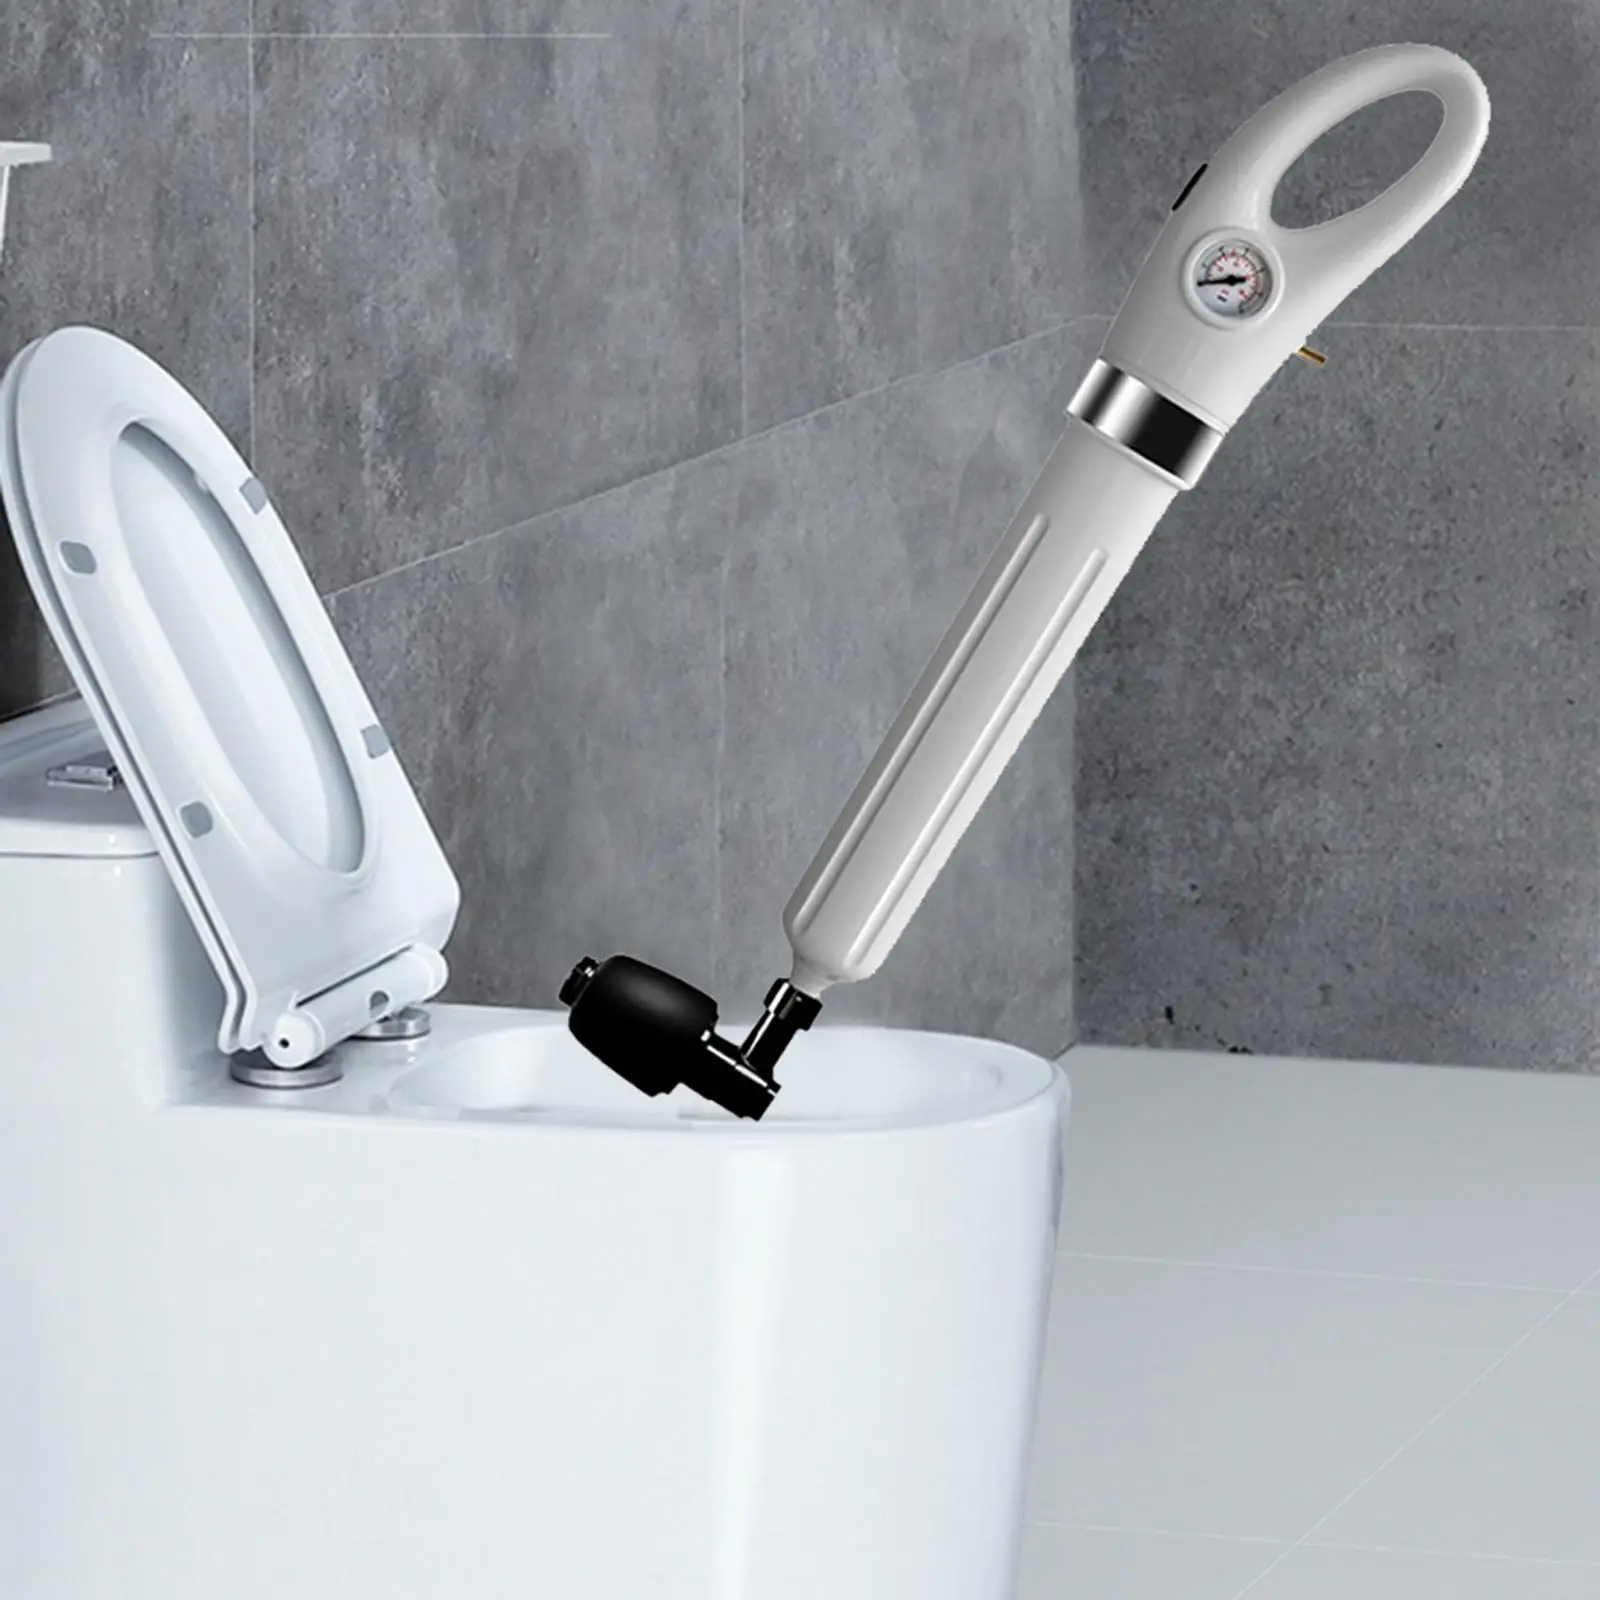 Toilet Pressure Inflator Plunger Pump Tool for Bathtub Shower